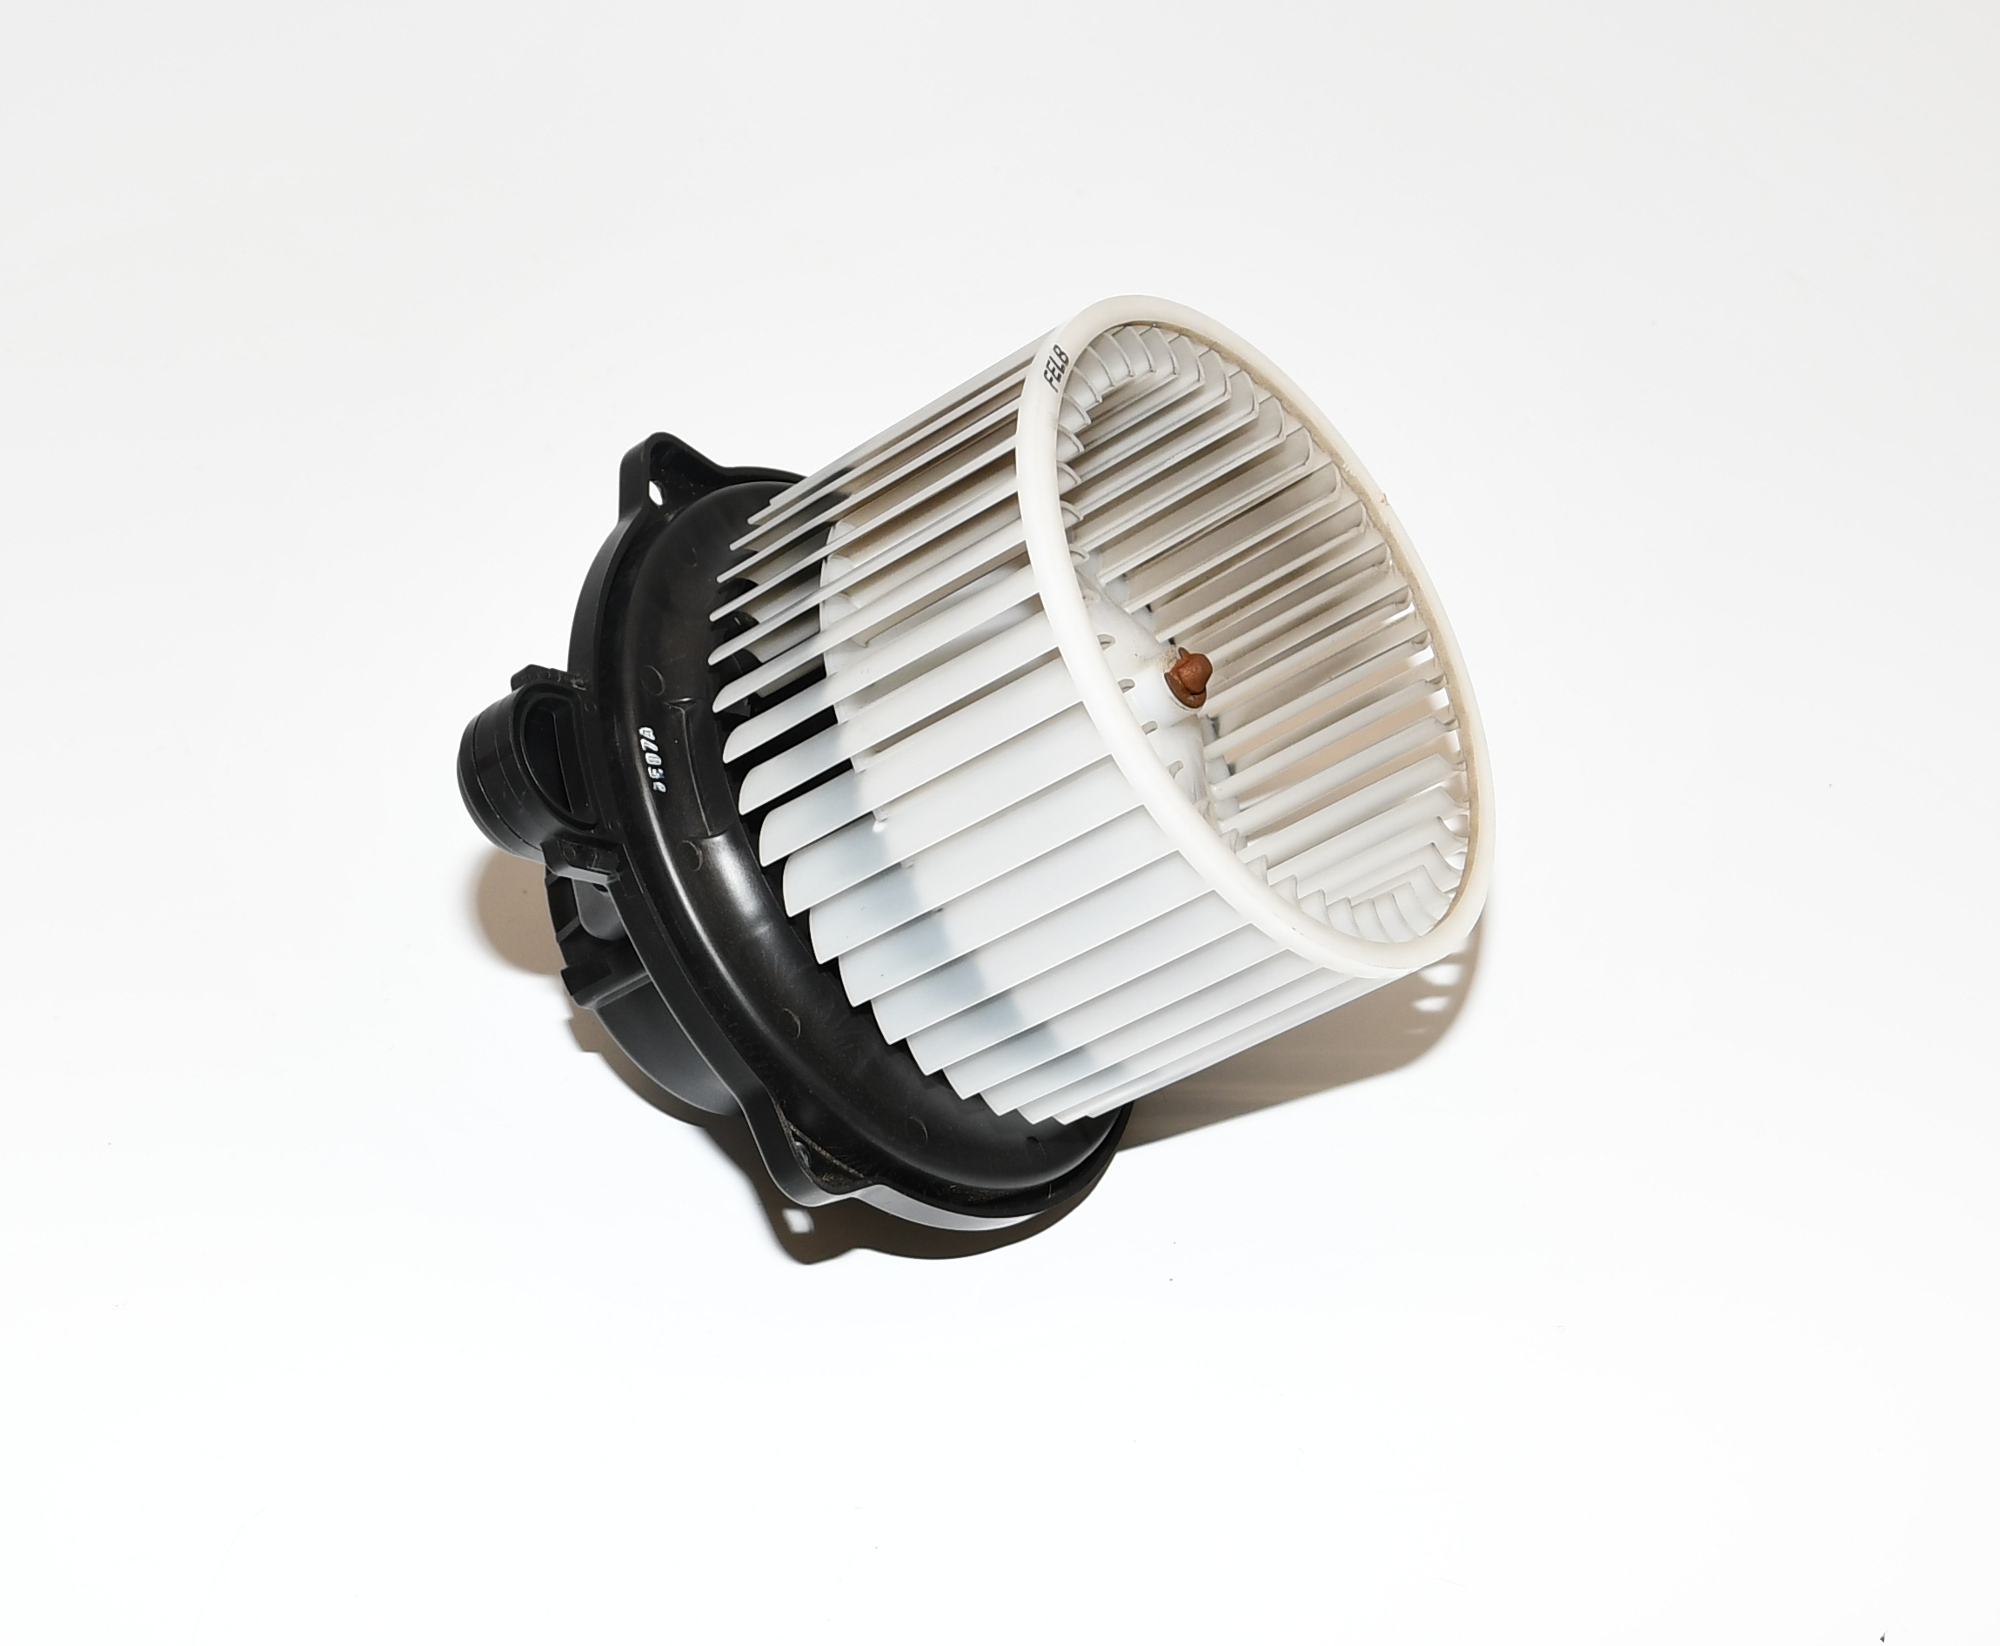 Chauffage ventilateur ventilateur moteur ventilation chauffage F00S33F023 i30 CW break orig. 